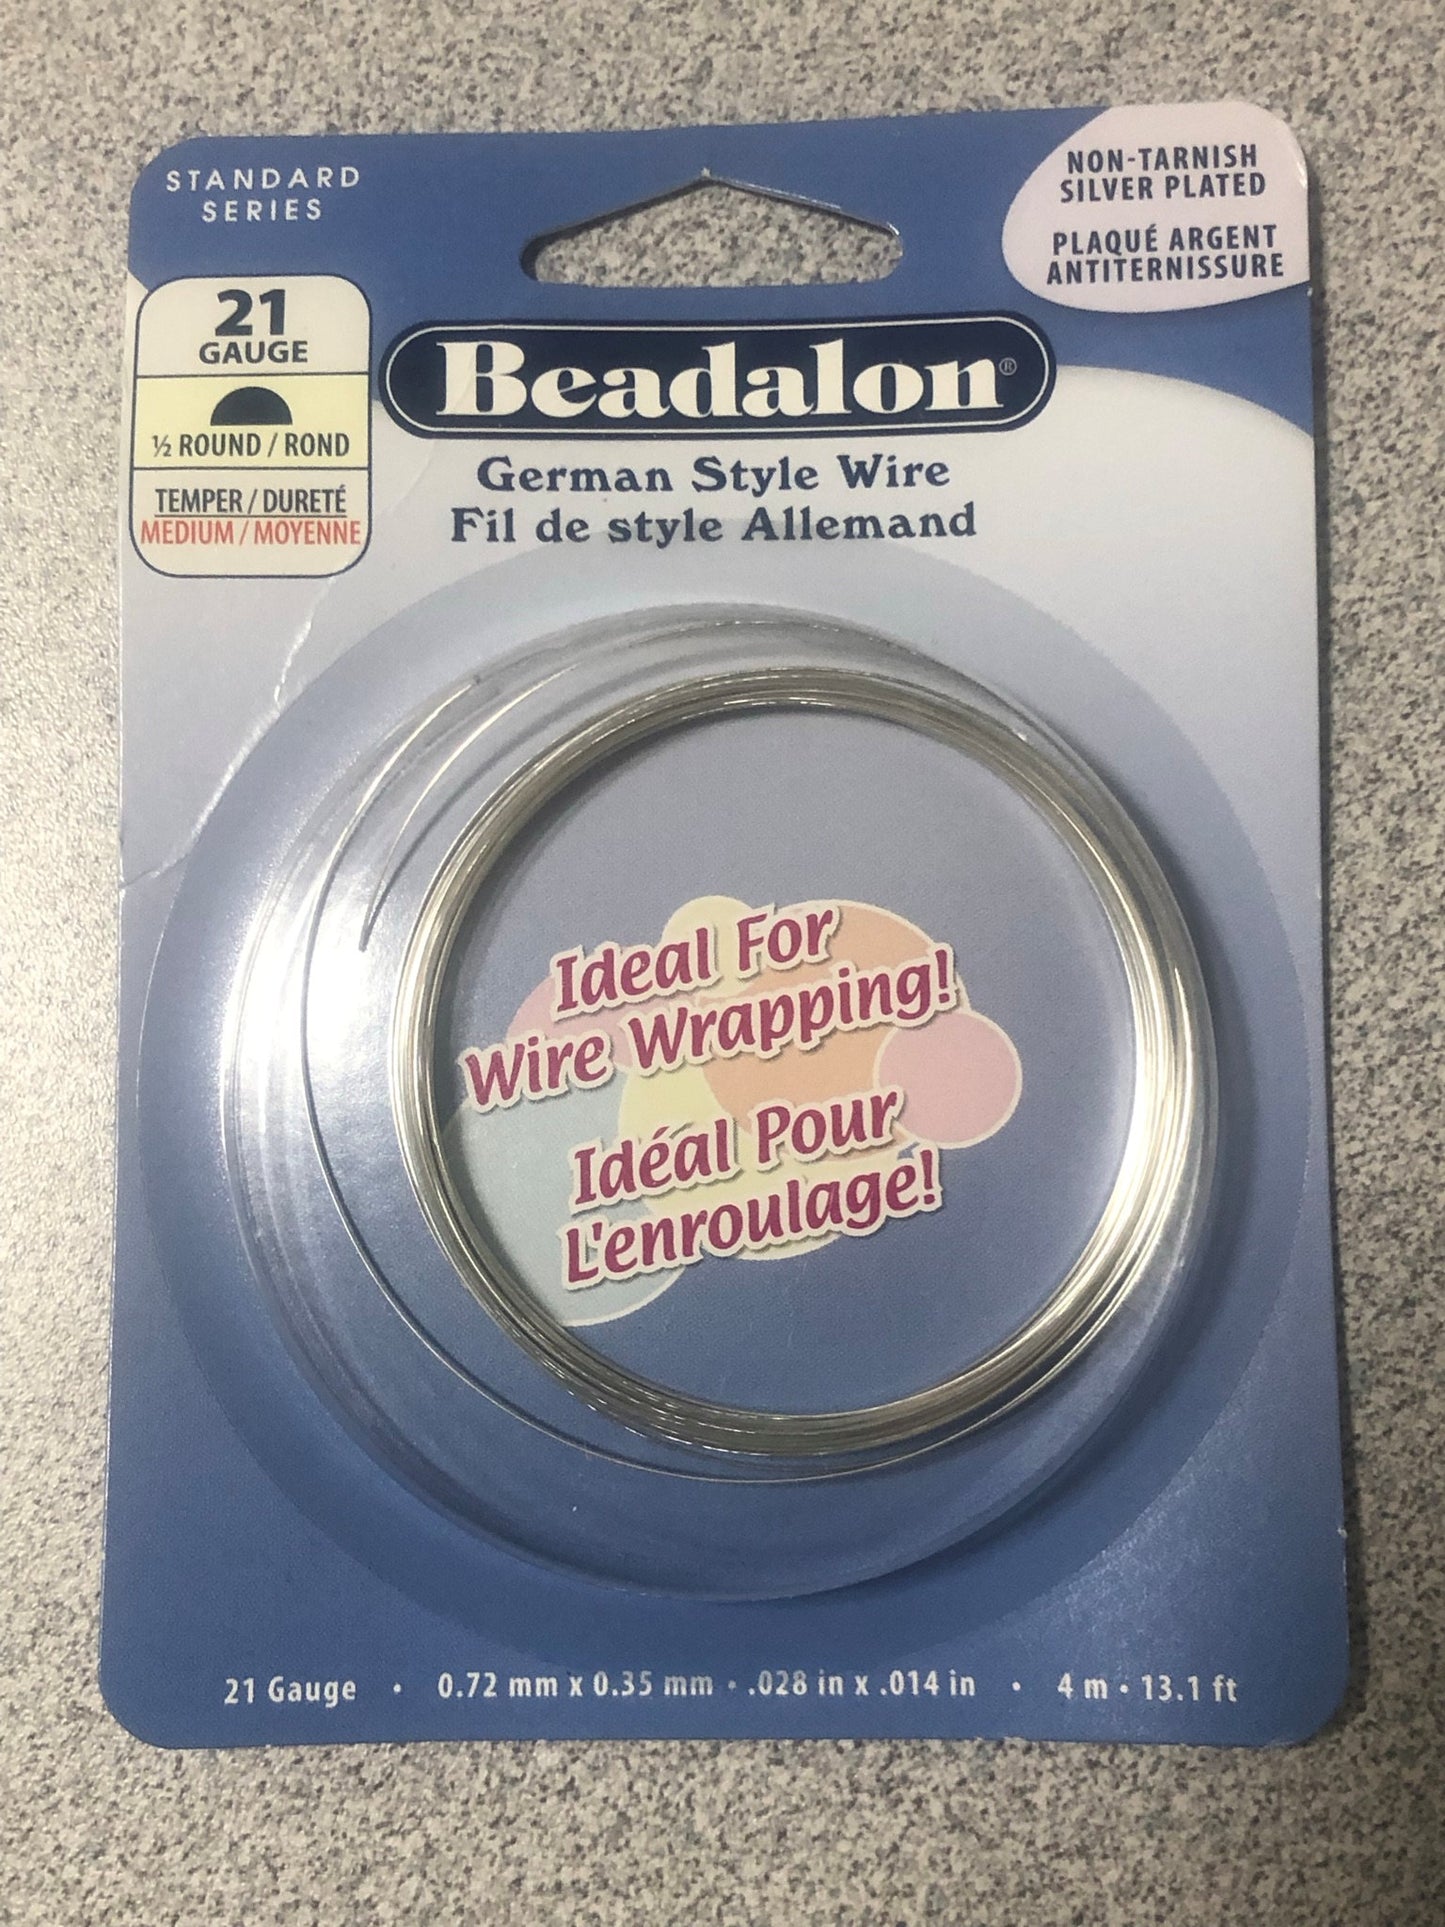 Beadalon Round 21-Gauge Medium Temper Non-Tarnishing Silver Plated Wire, 4 m/13.1 ft 180B-121